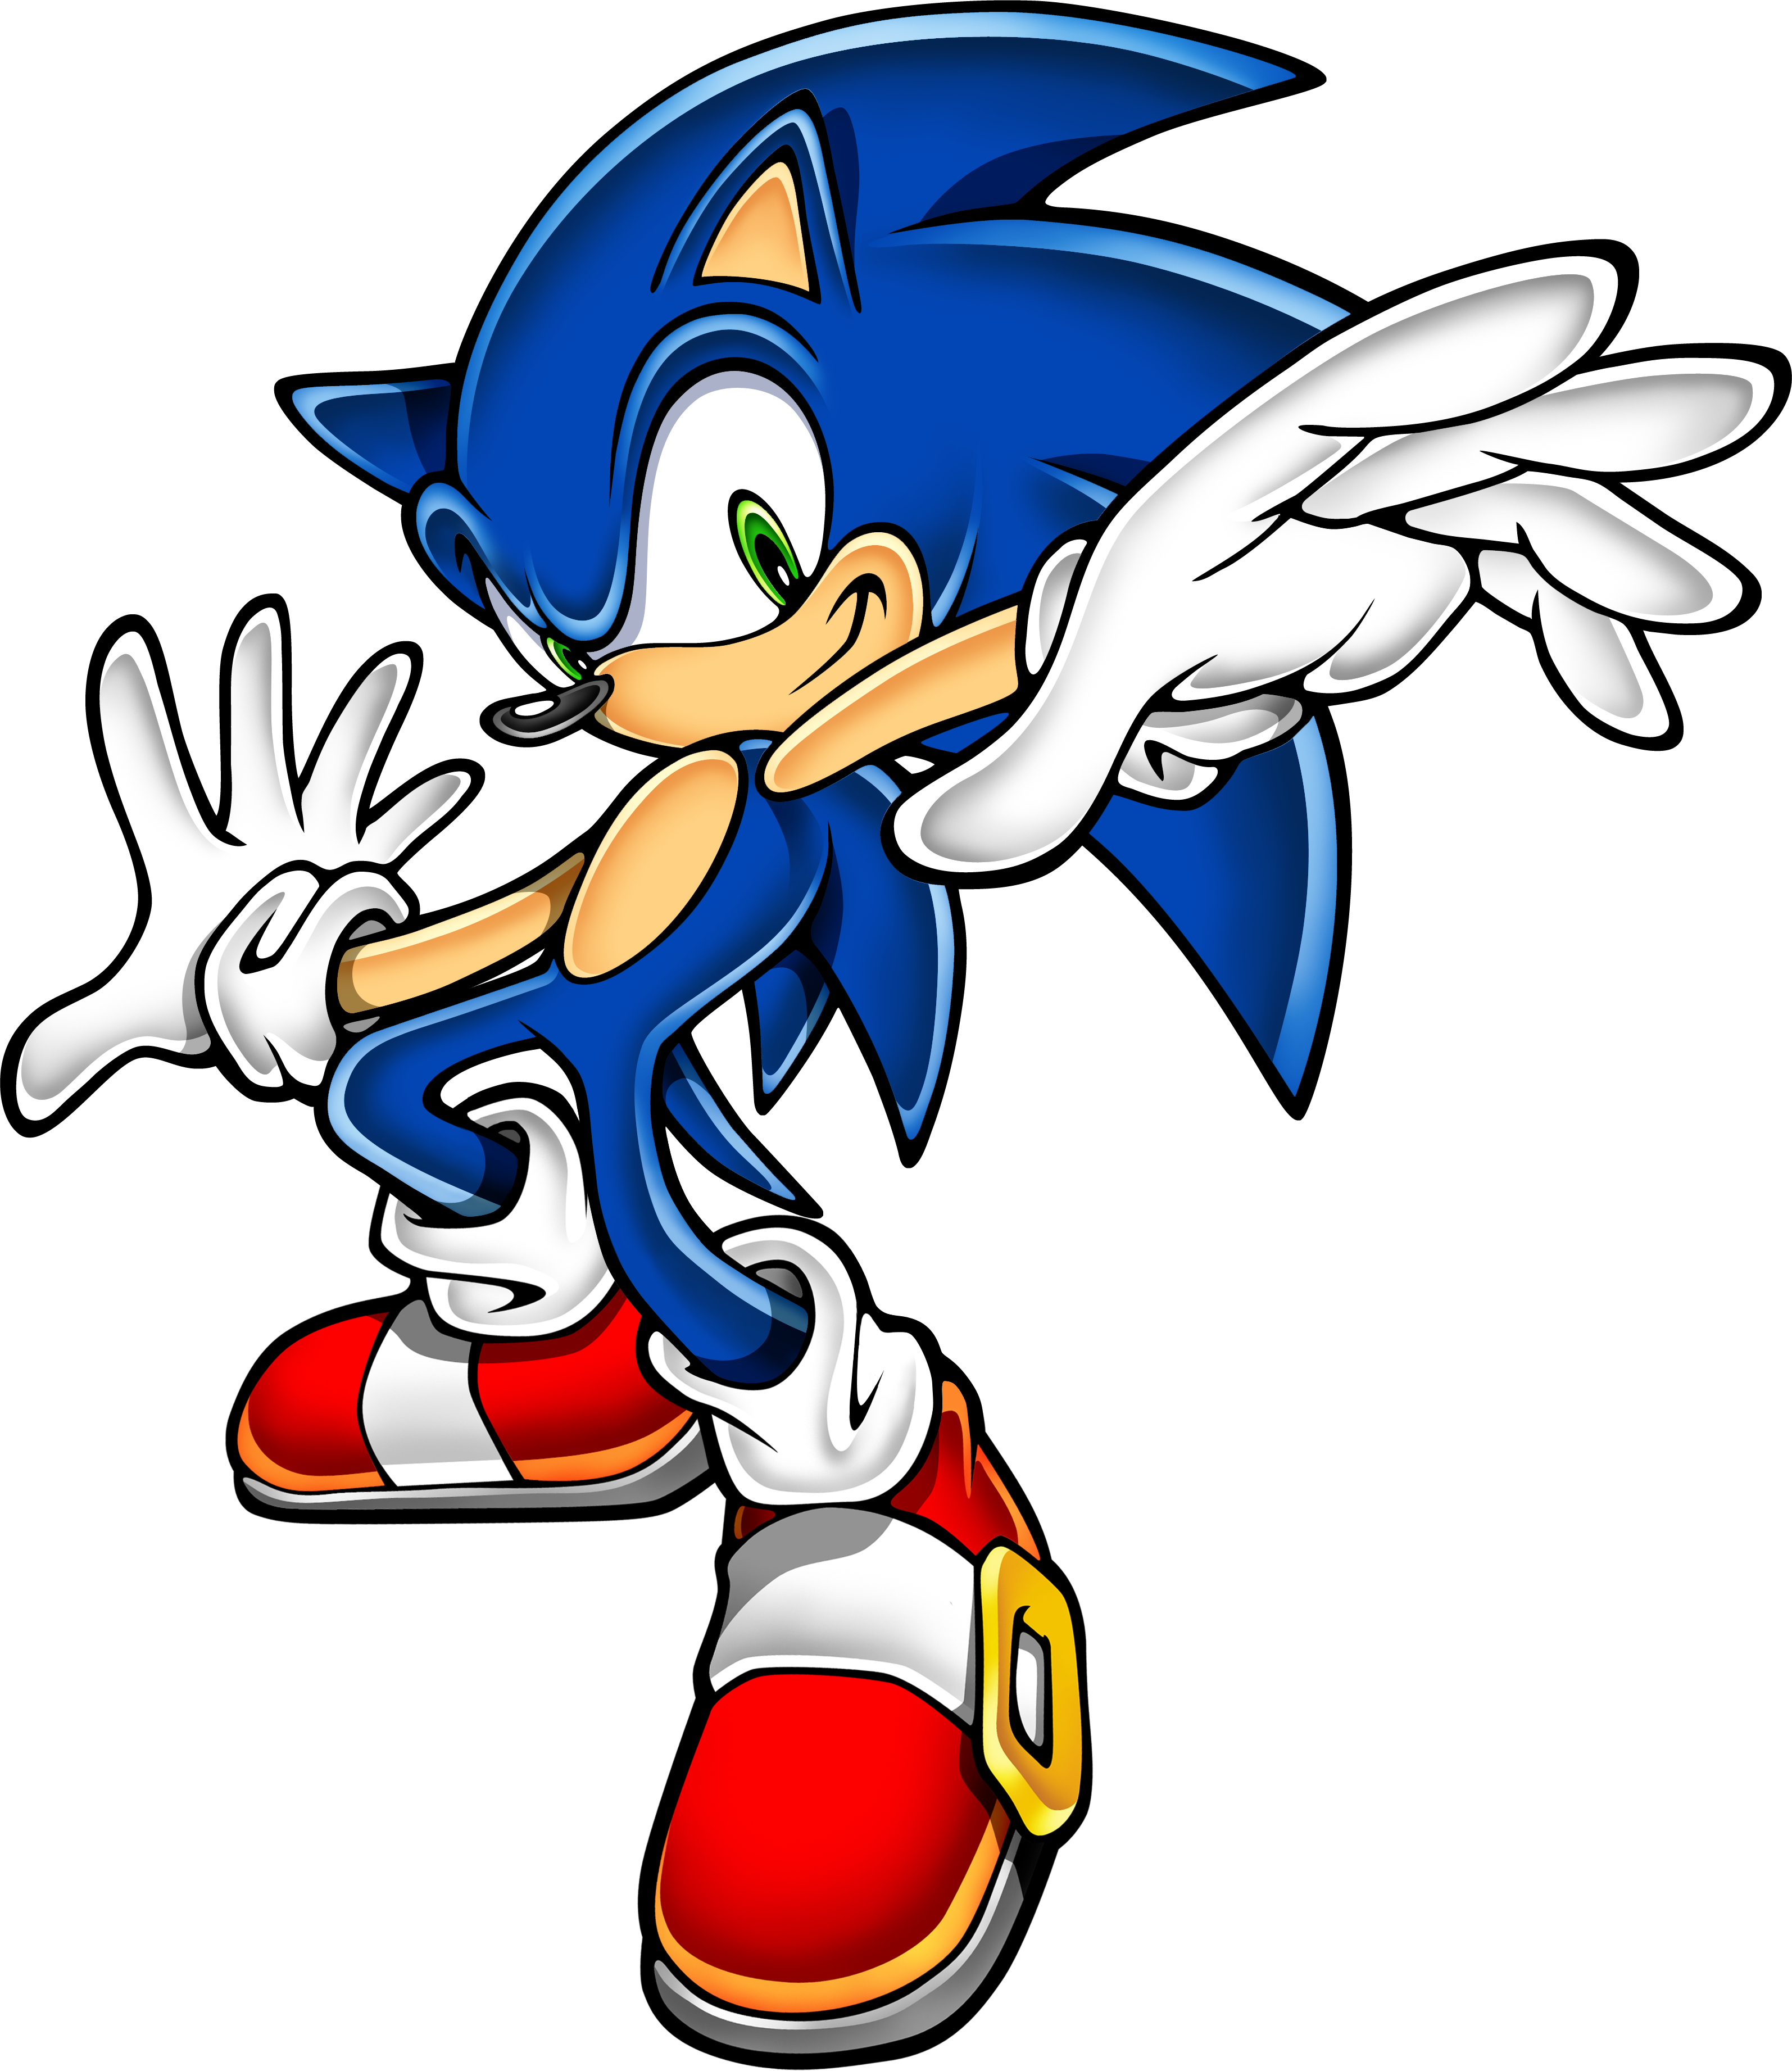 Sonic_Art_Assets_DVD_-_Sonic_The_Hedgehog_-_19.png